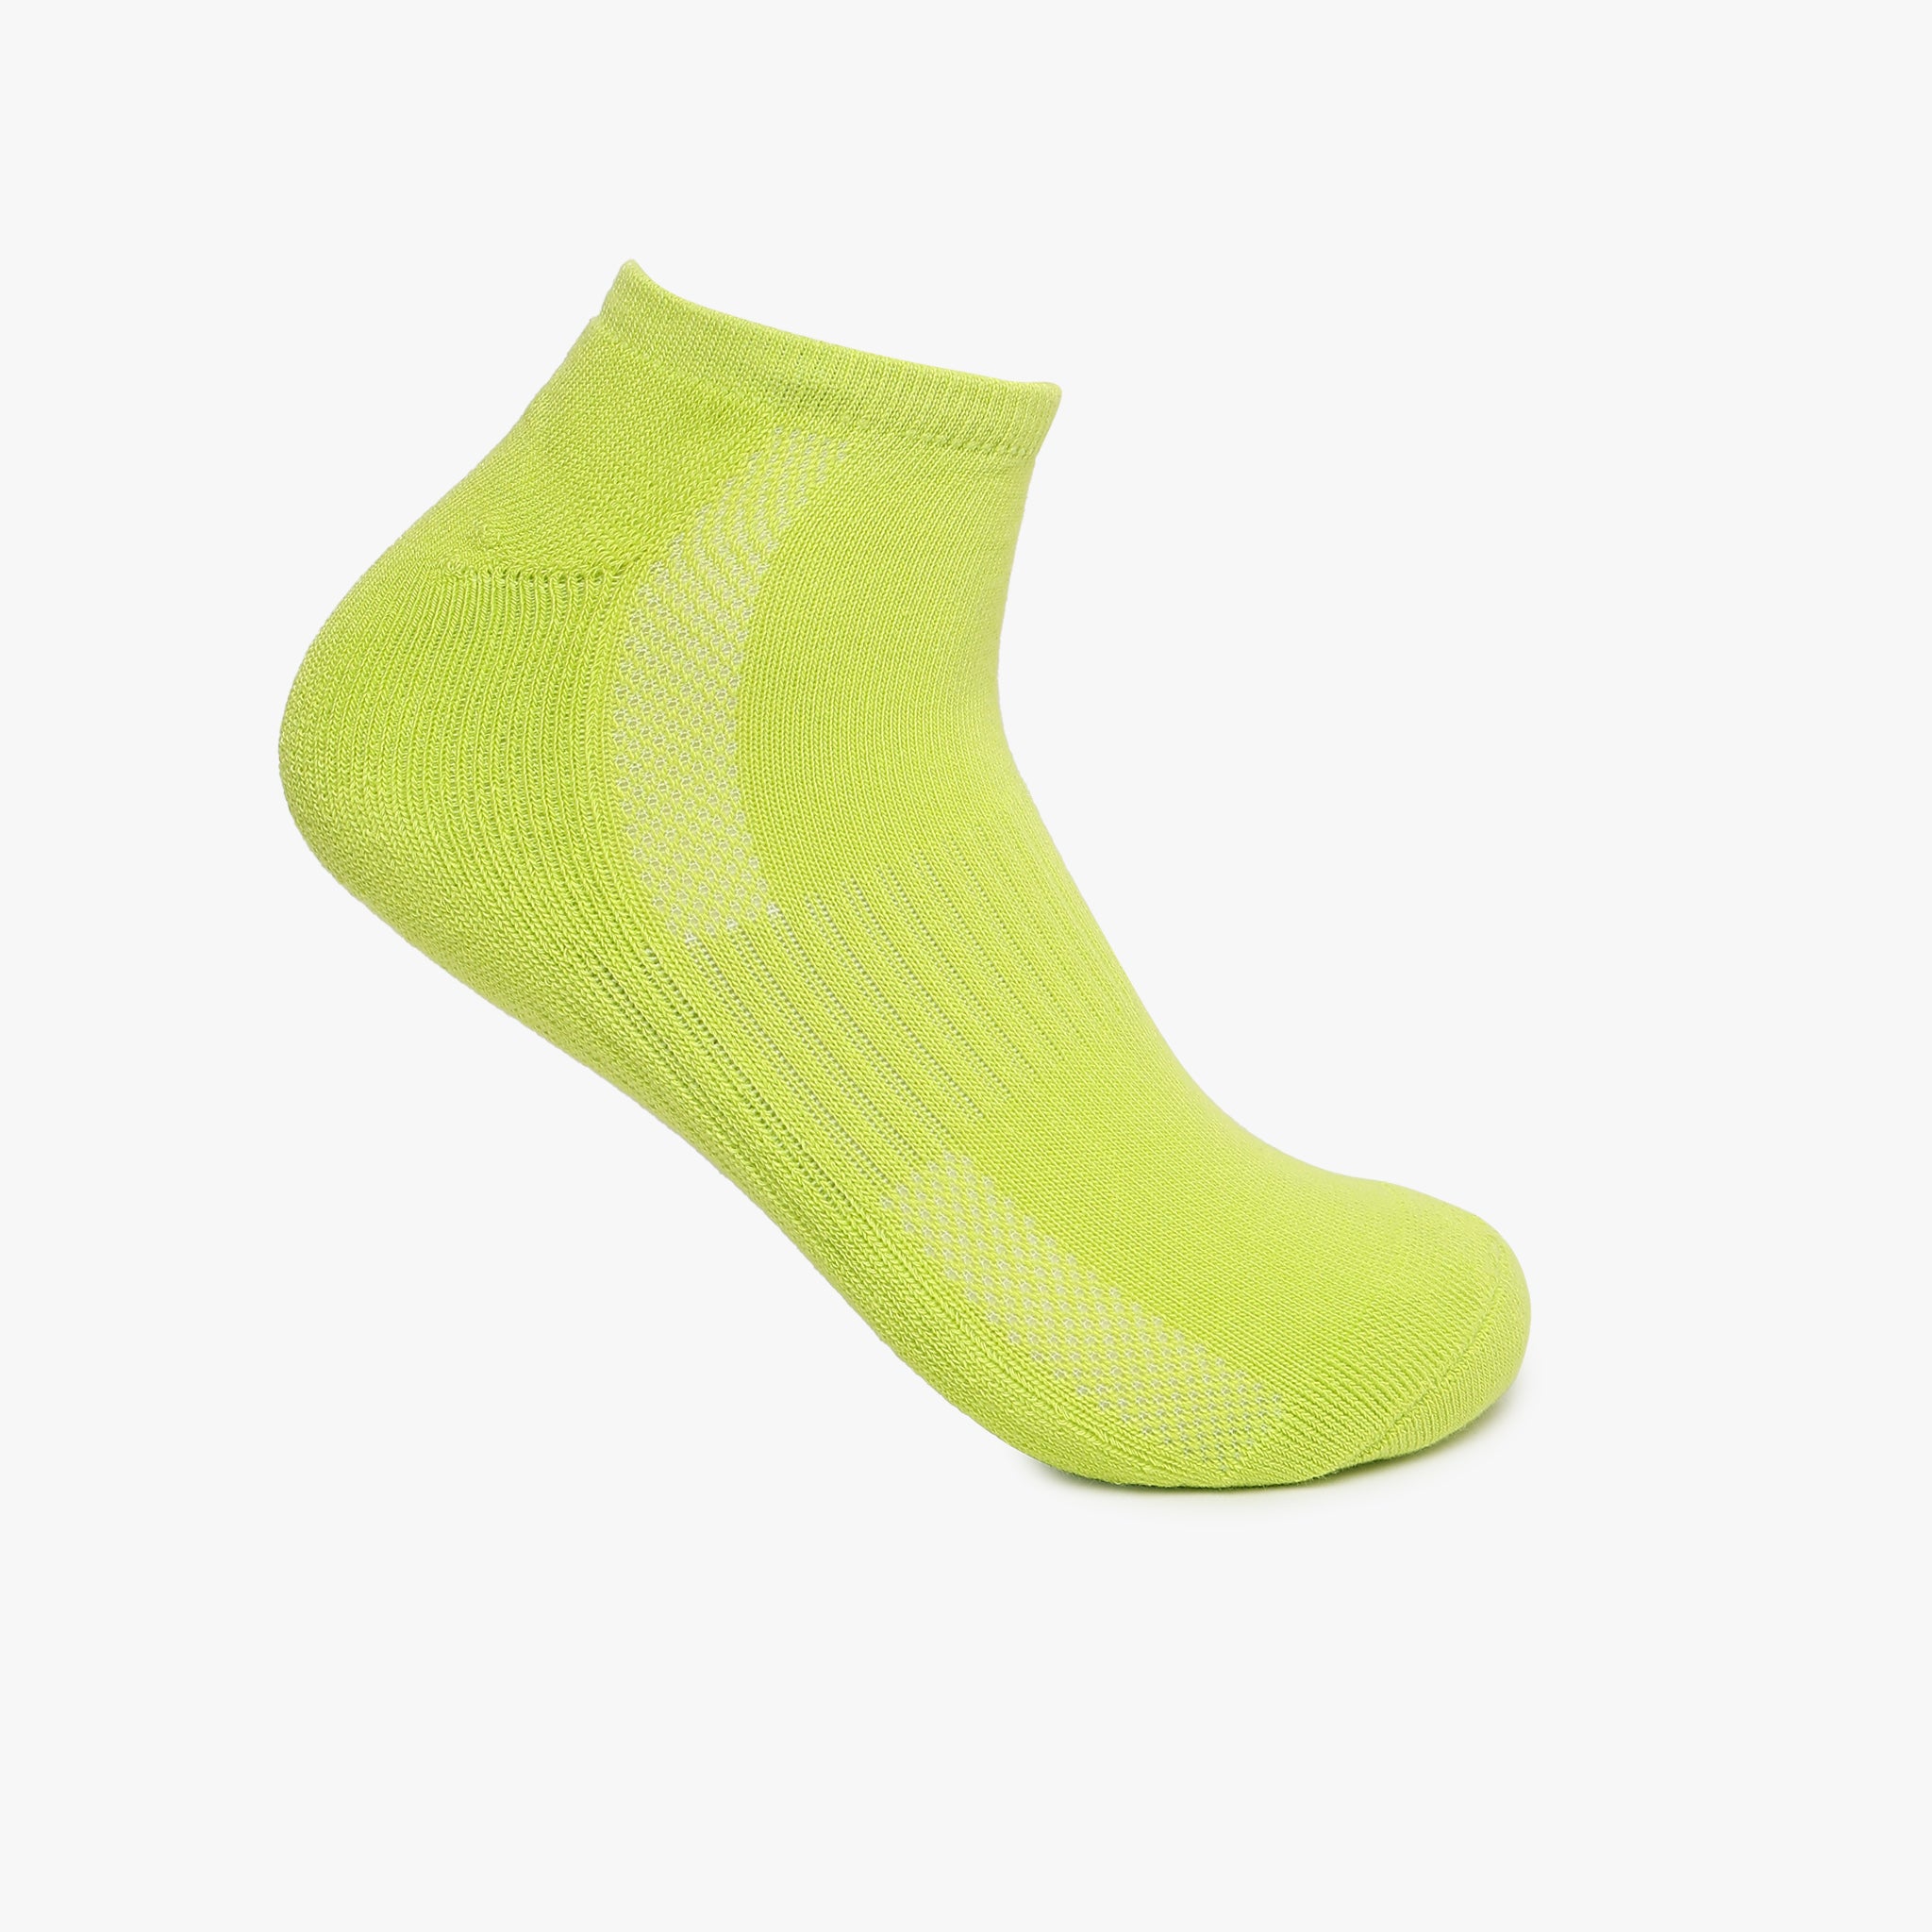 Womens Cotton Ankle Length Socks